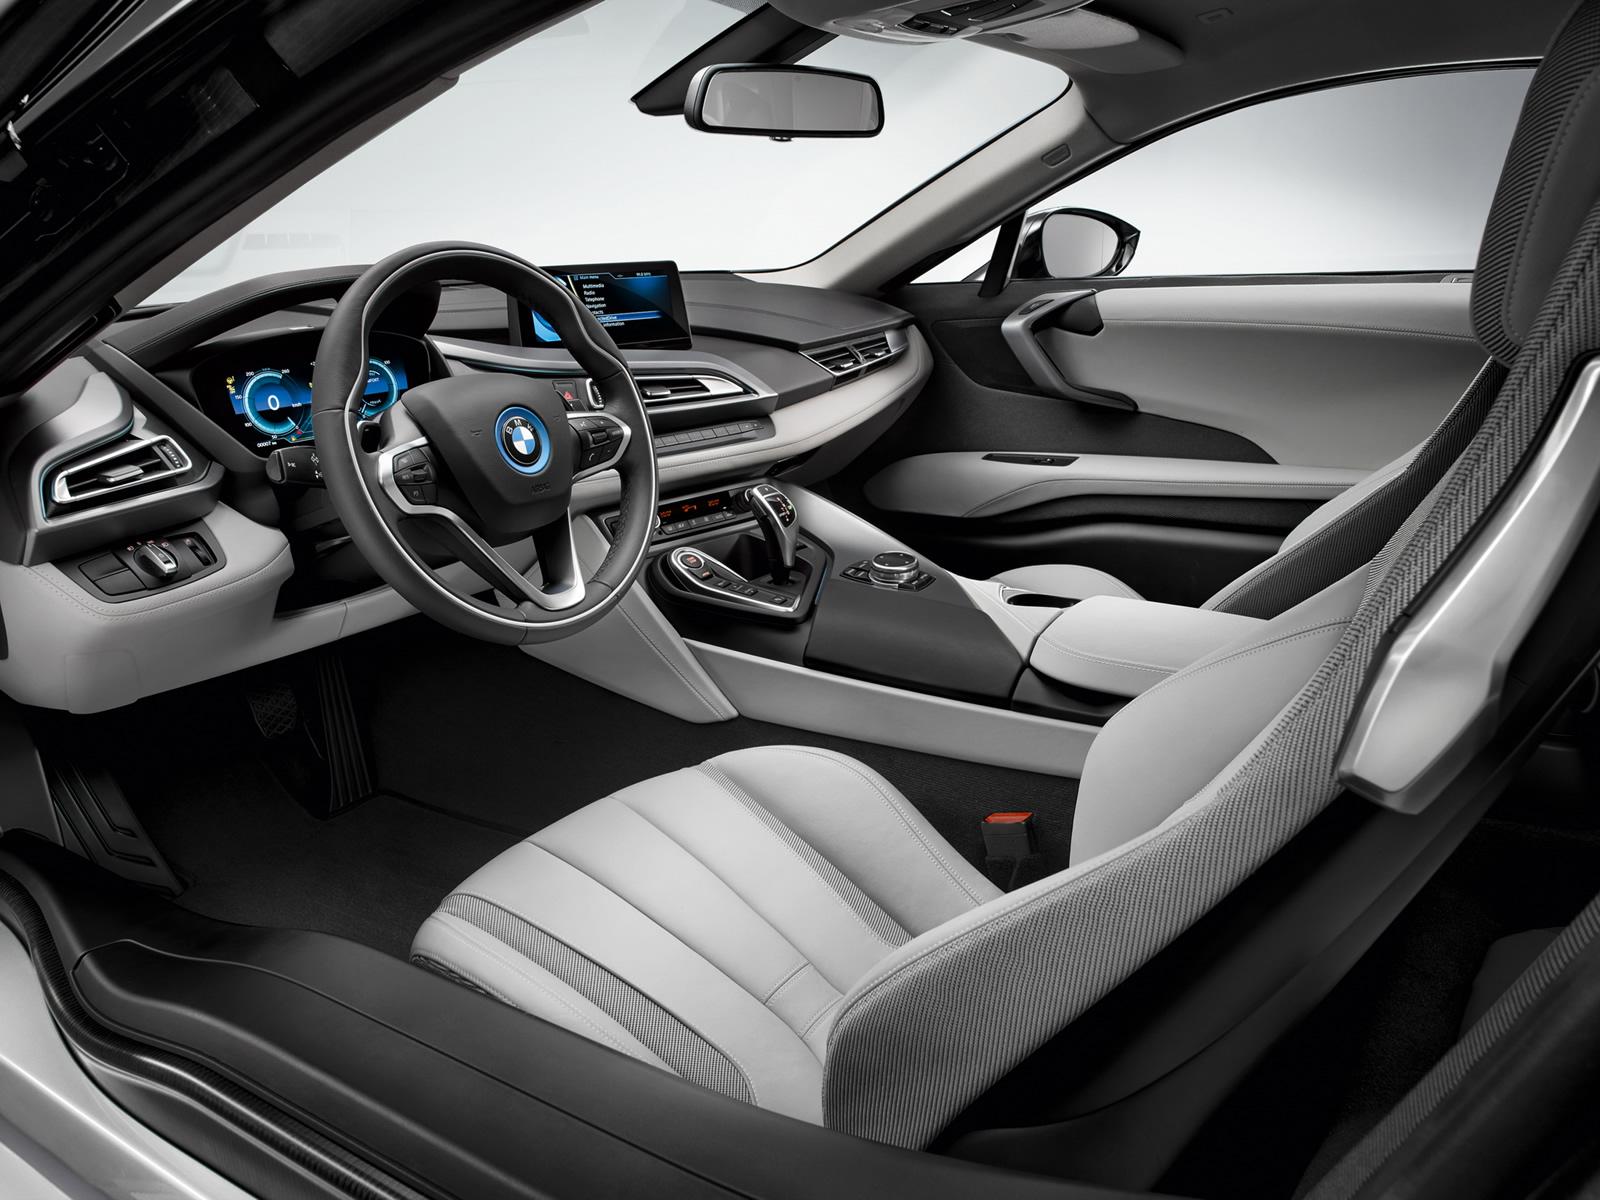 BMW i8 interior breaks cover